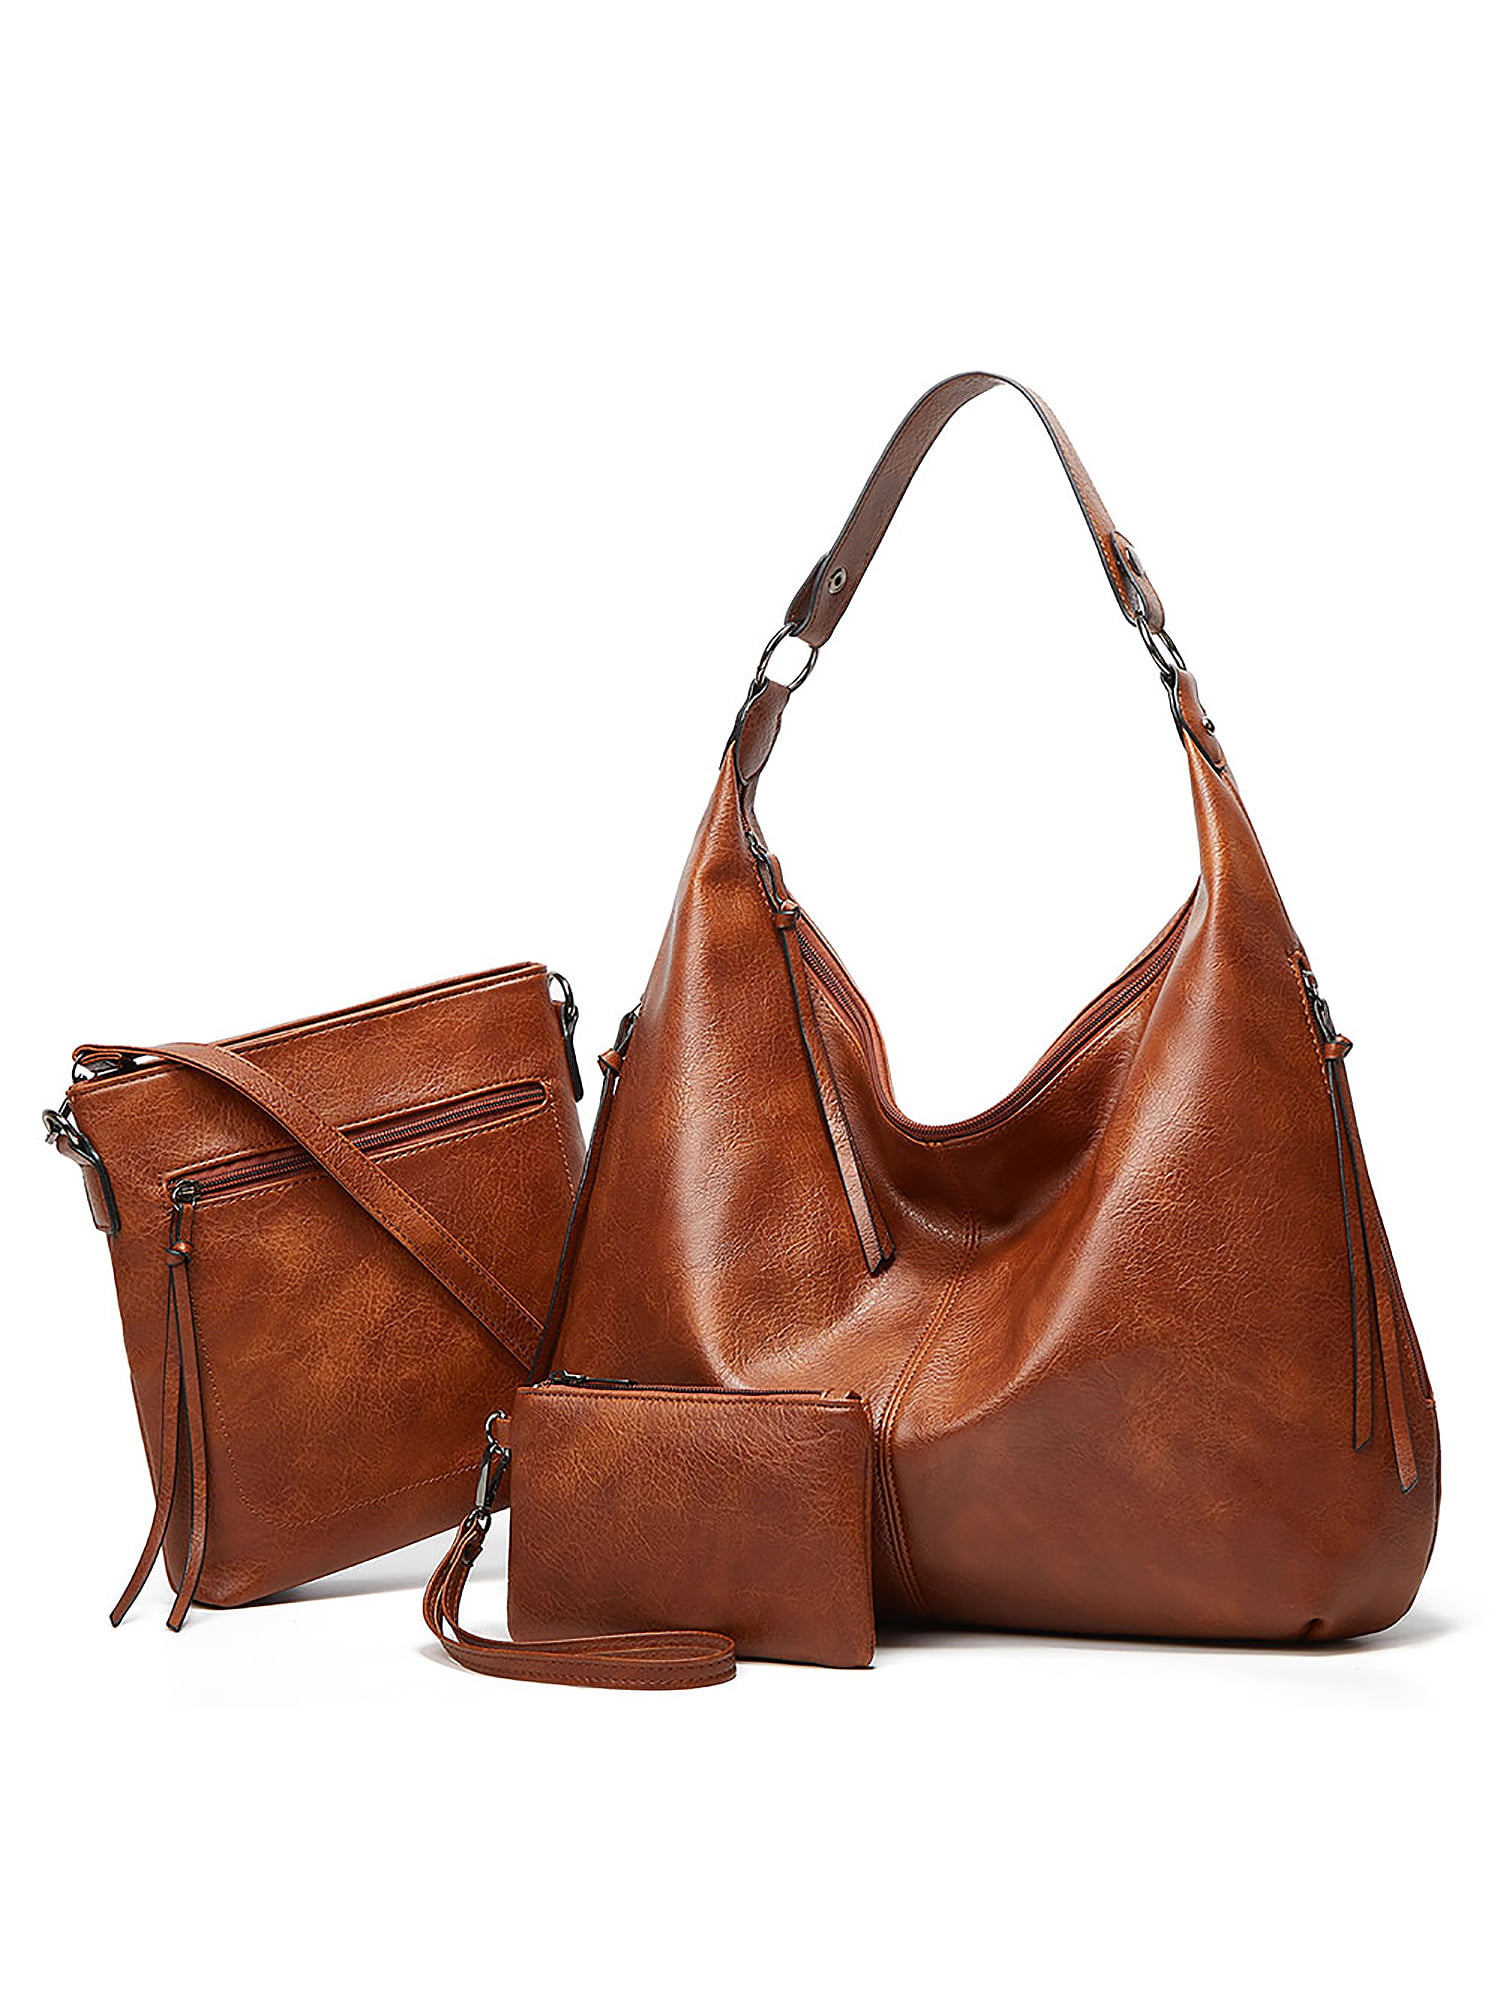 Women Tote Leather Shoulder Bag Handbag Messenger Crossbody Hobo Purse Satchel